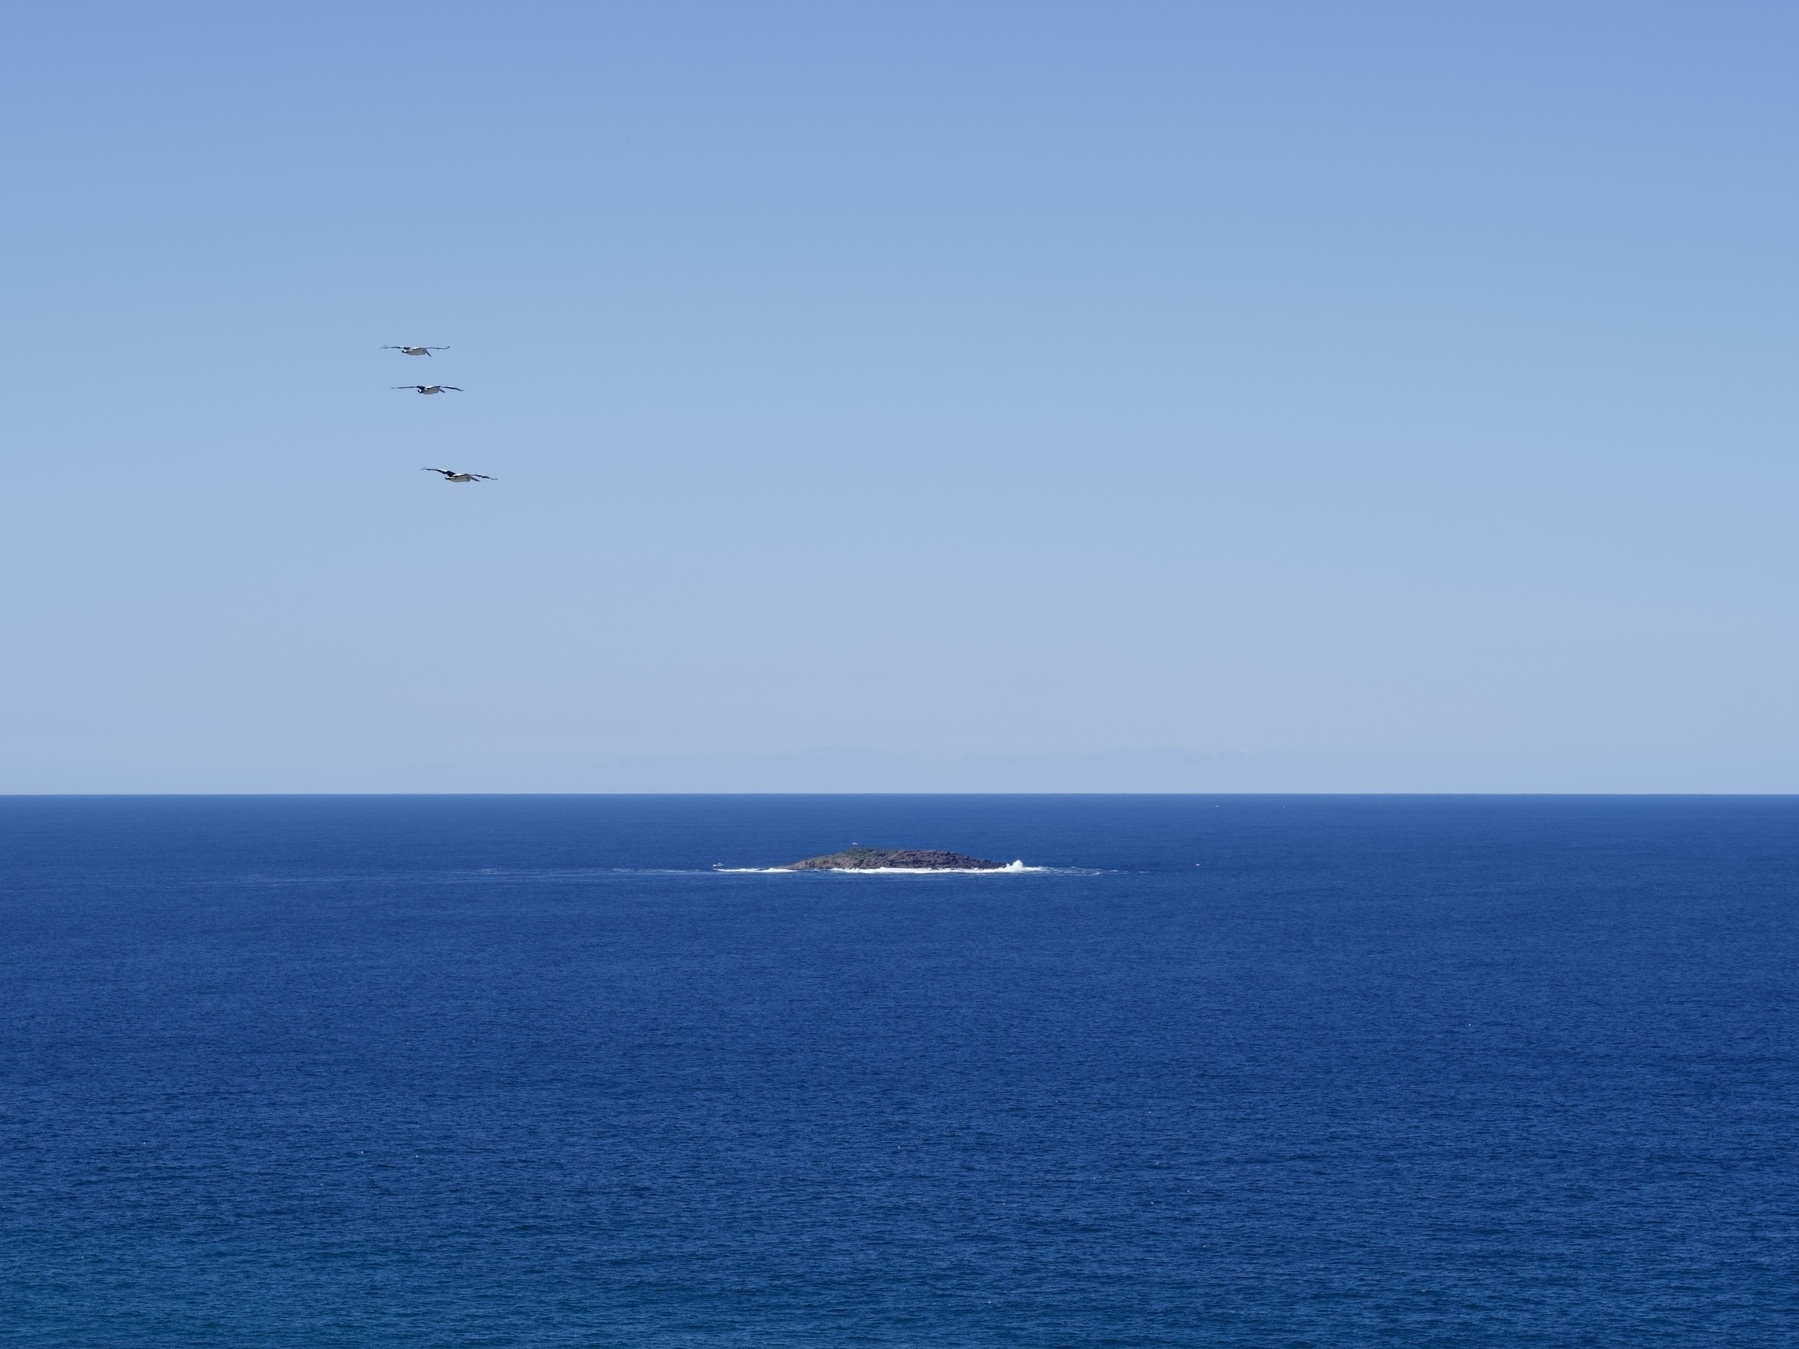 Three pelicans fly over the sea towards an island.